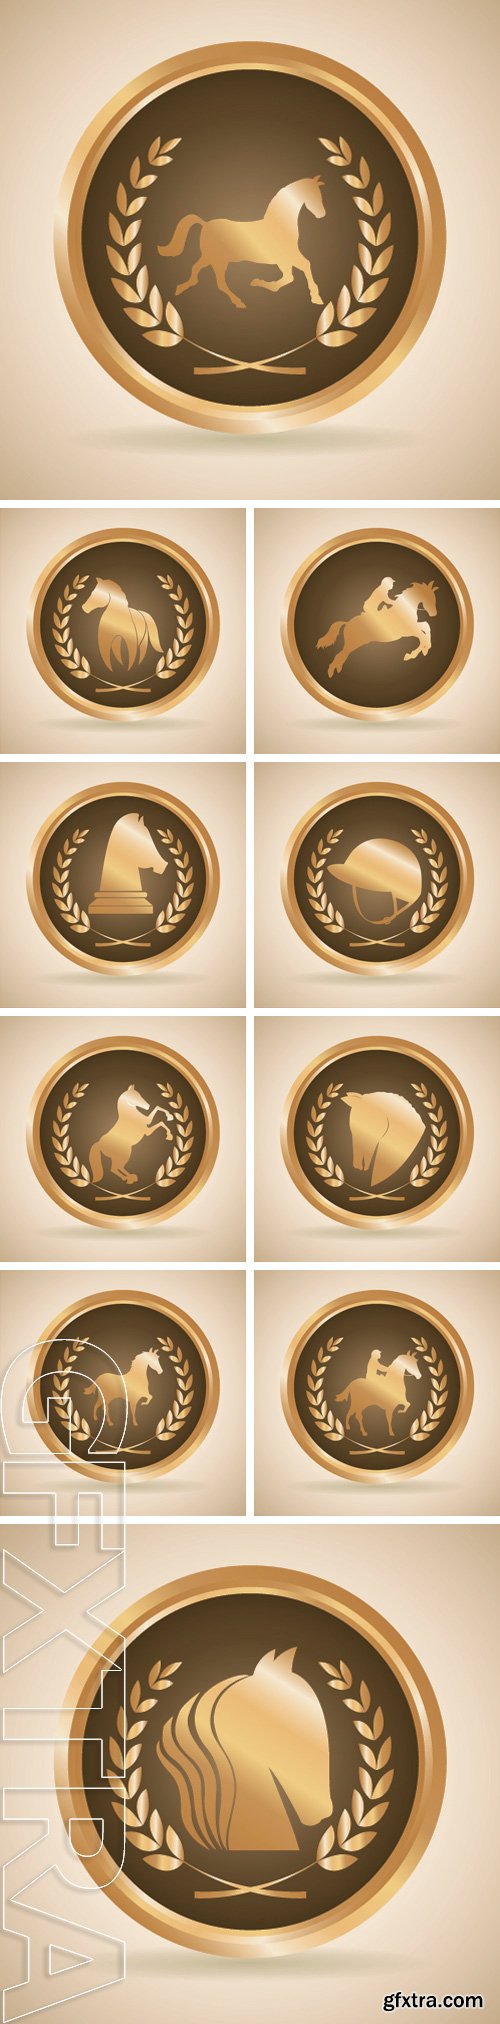 Stock Vectors - Horse Riding digital design, vector illustration graphic